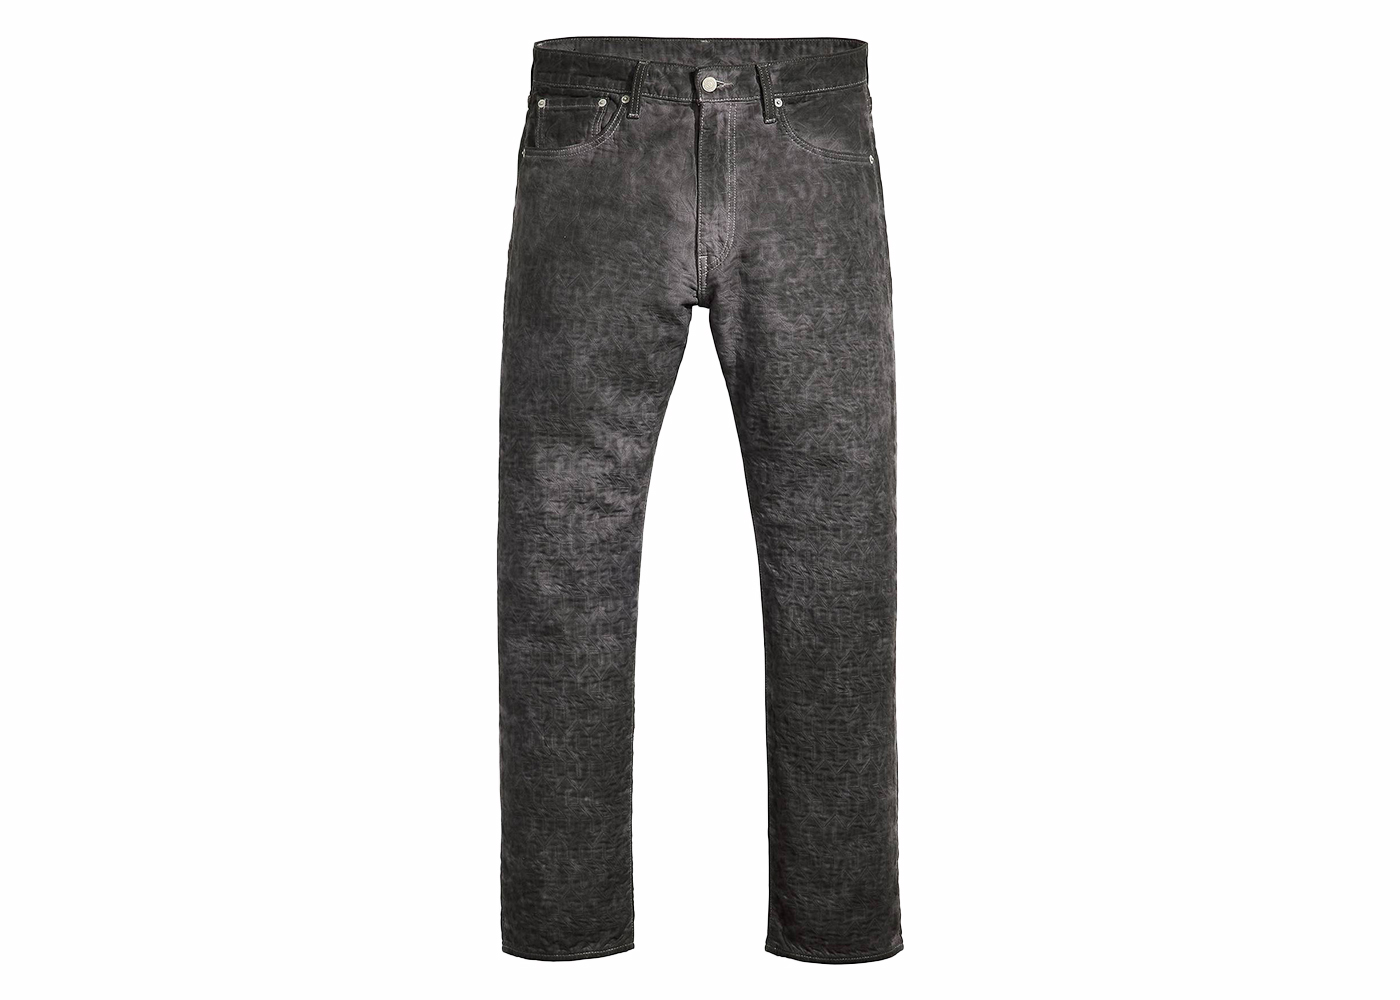 Stussy × Levi's Dyed Jacquard Jeans 34